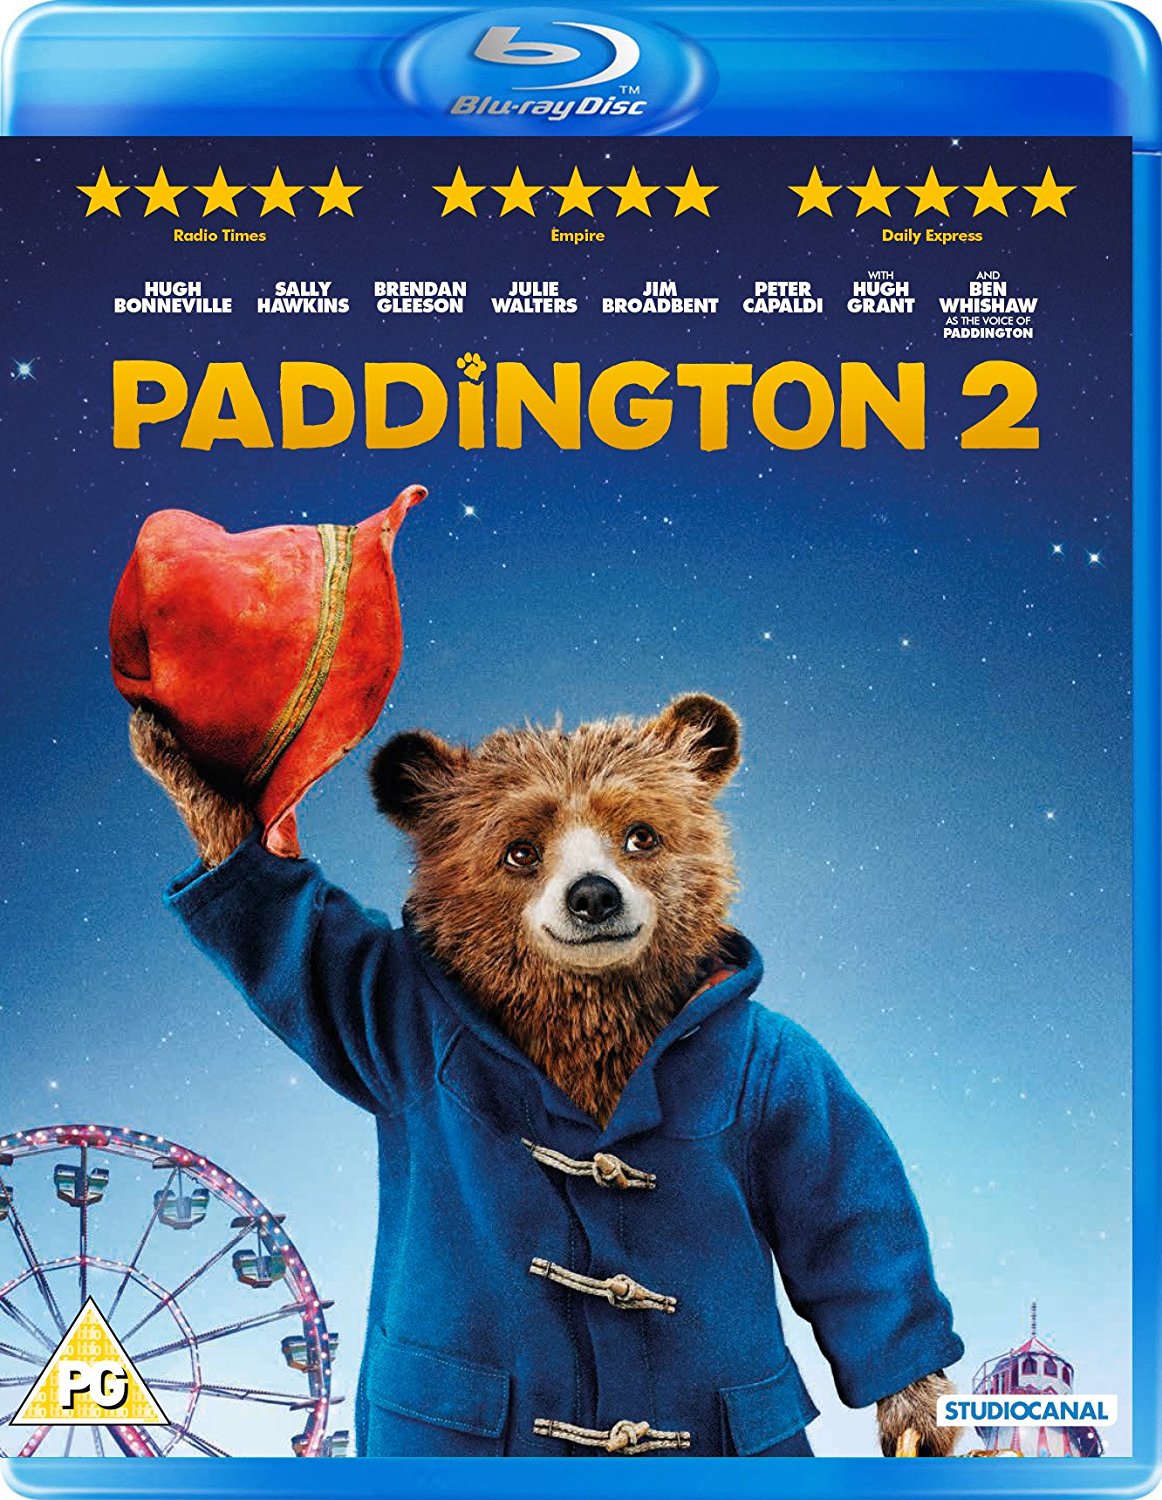 boom competitions - win Paddington 2 on Blu-ray